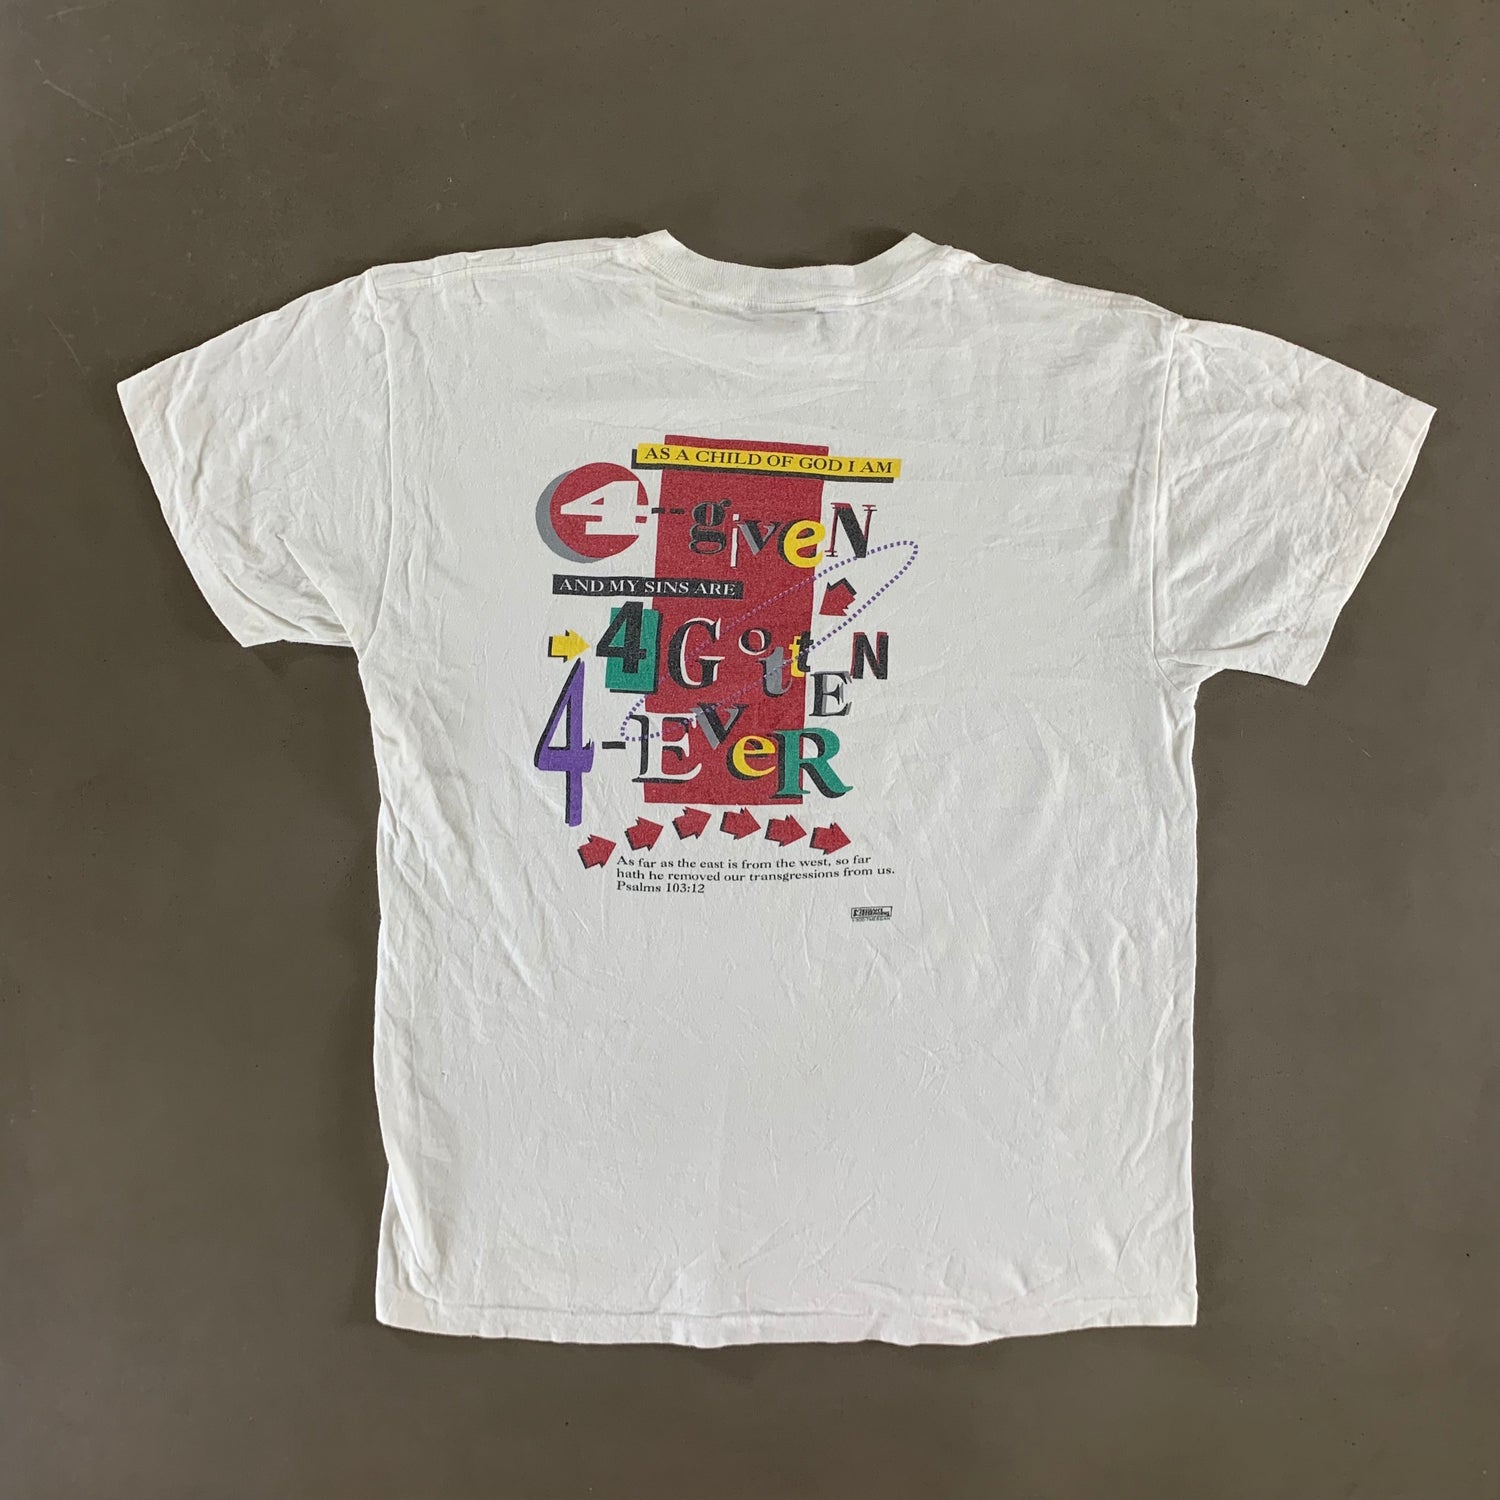 Vintage 1990s Jesus T-shirt size Large